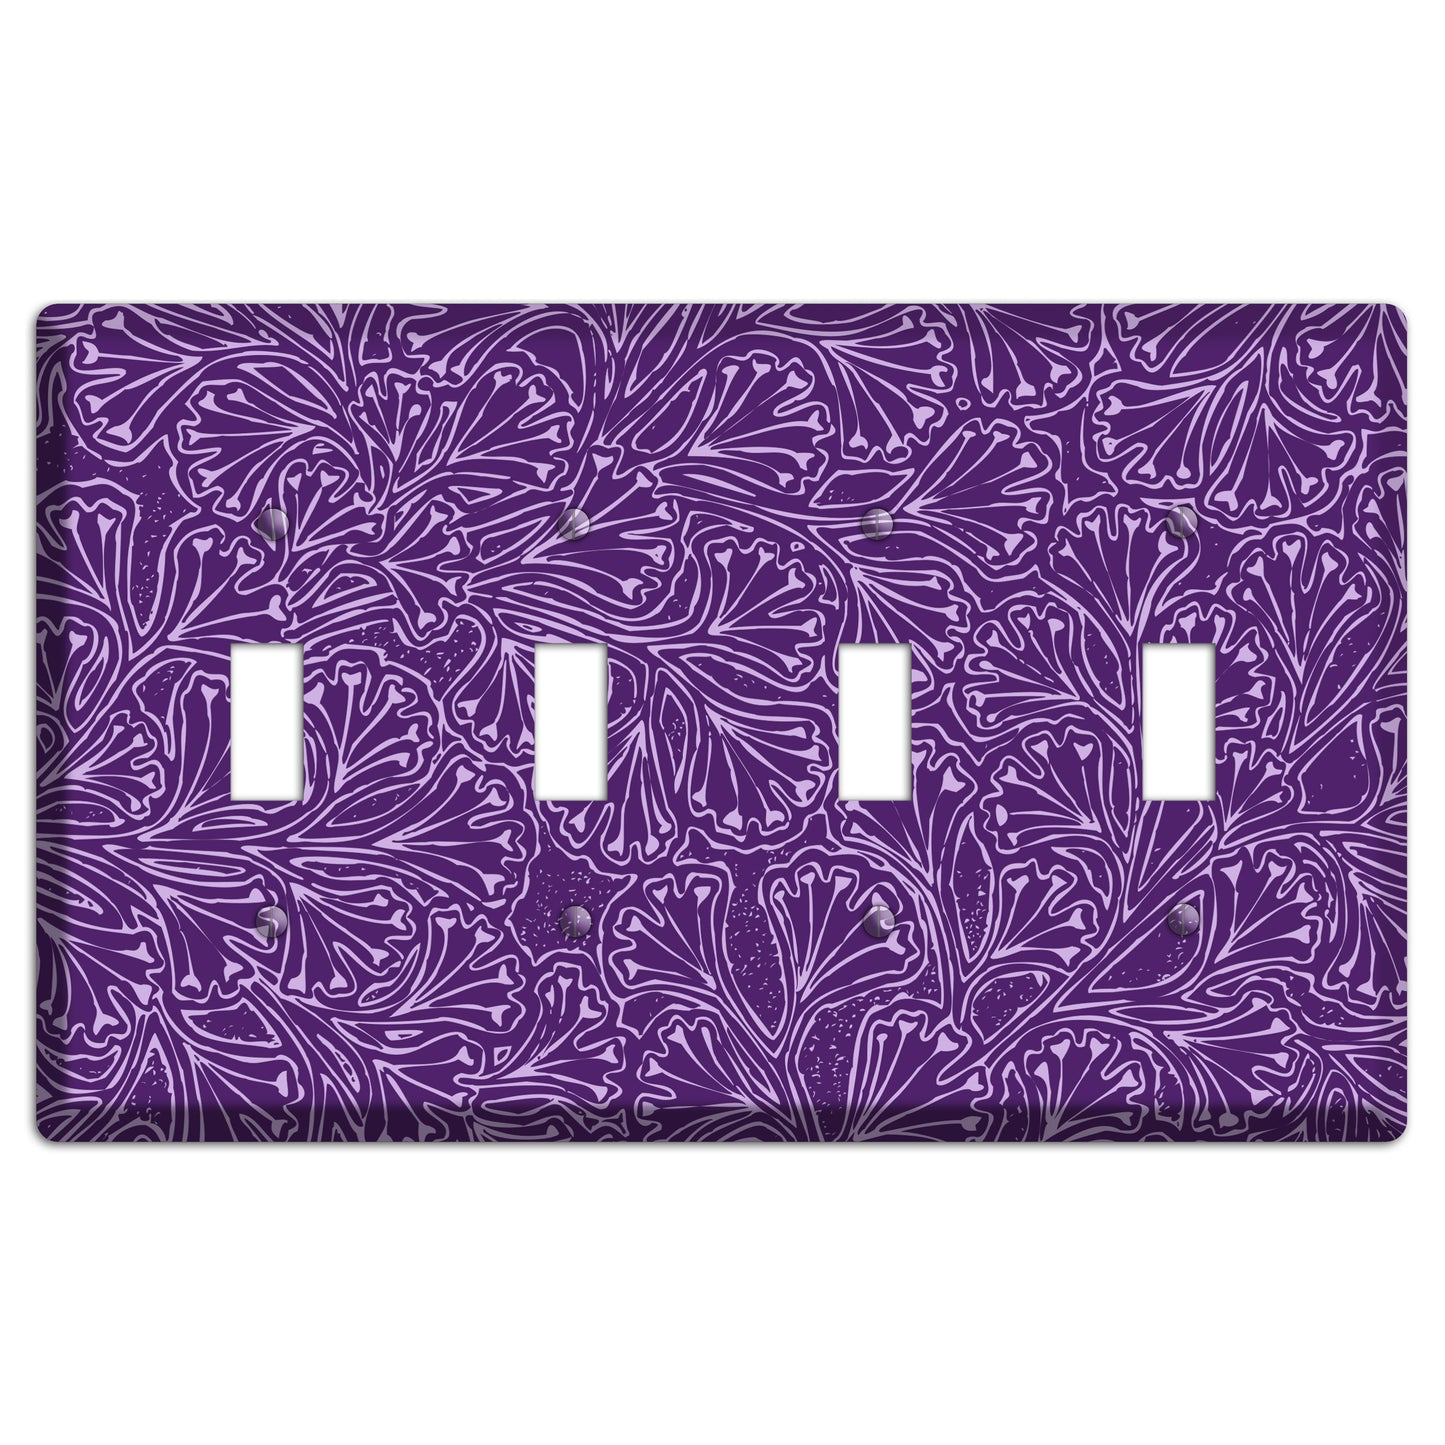 Deco Purple Interlocking Floral 4 Toggle Wallplate